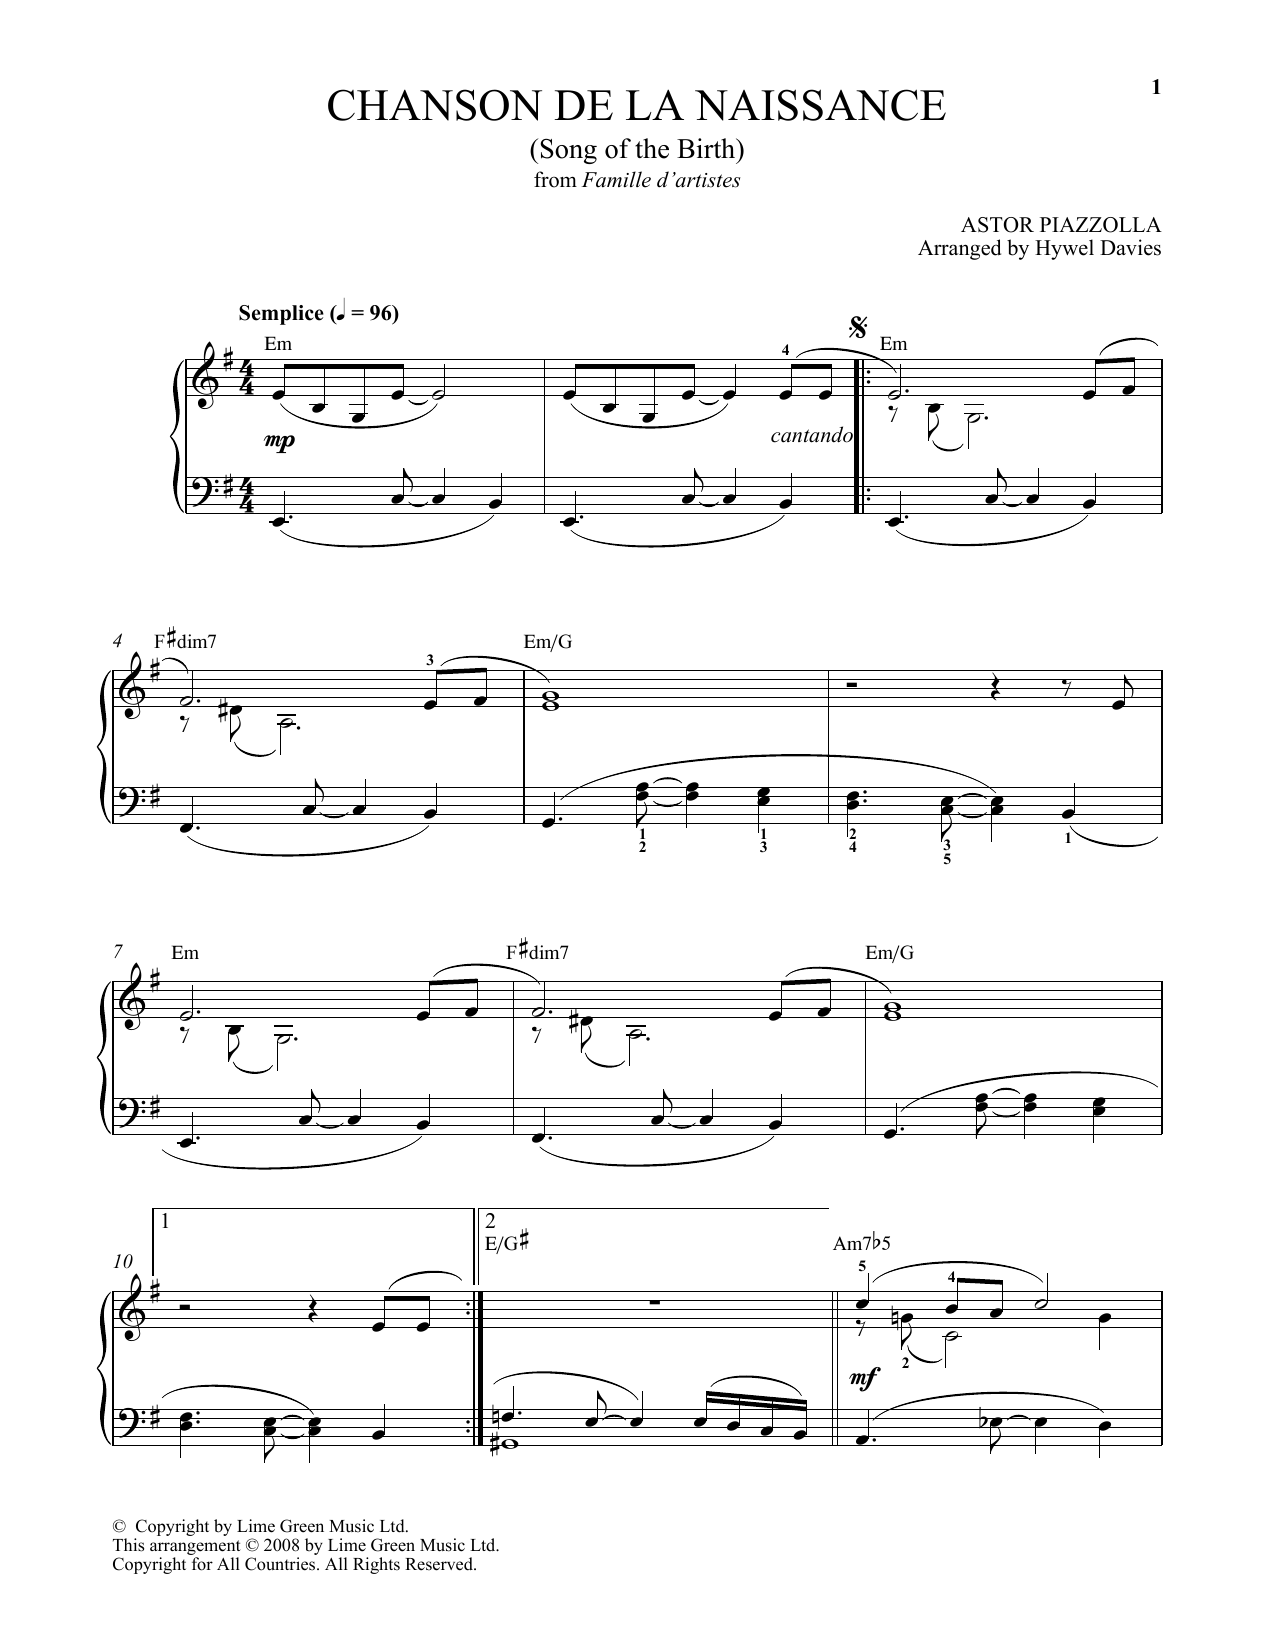 Download Astor Piazzolla Chanson De La Naissance Sheet Music